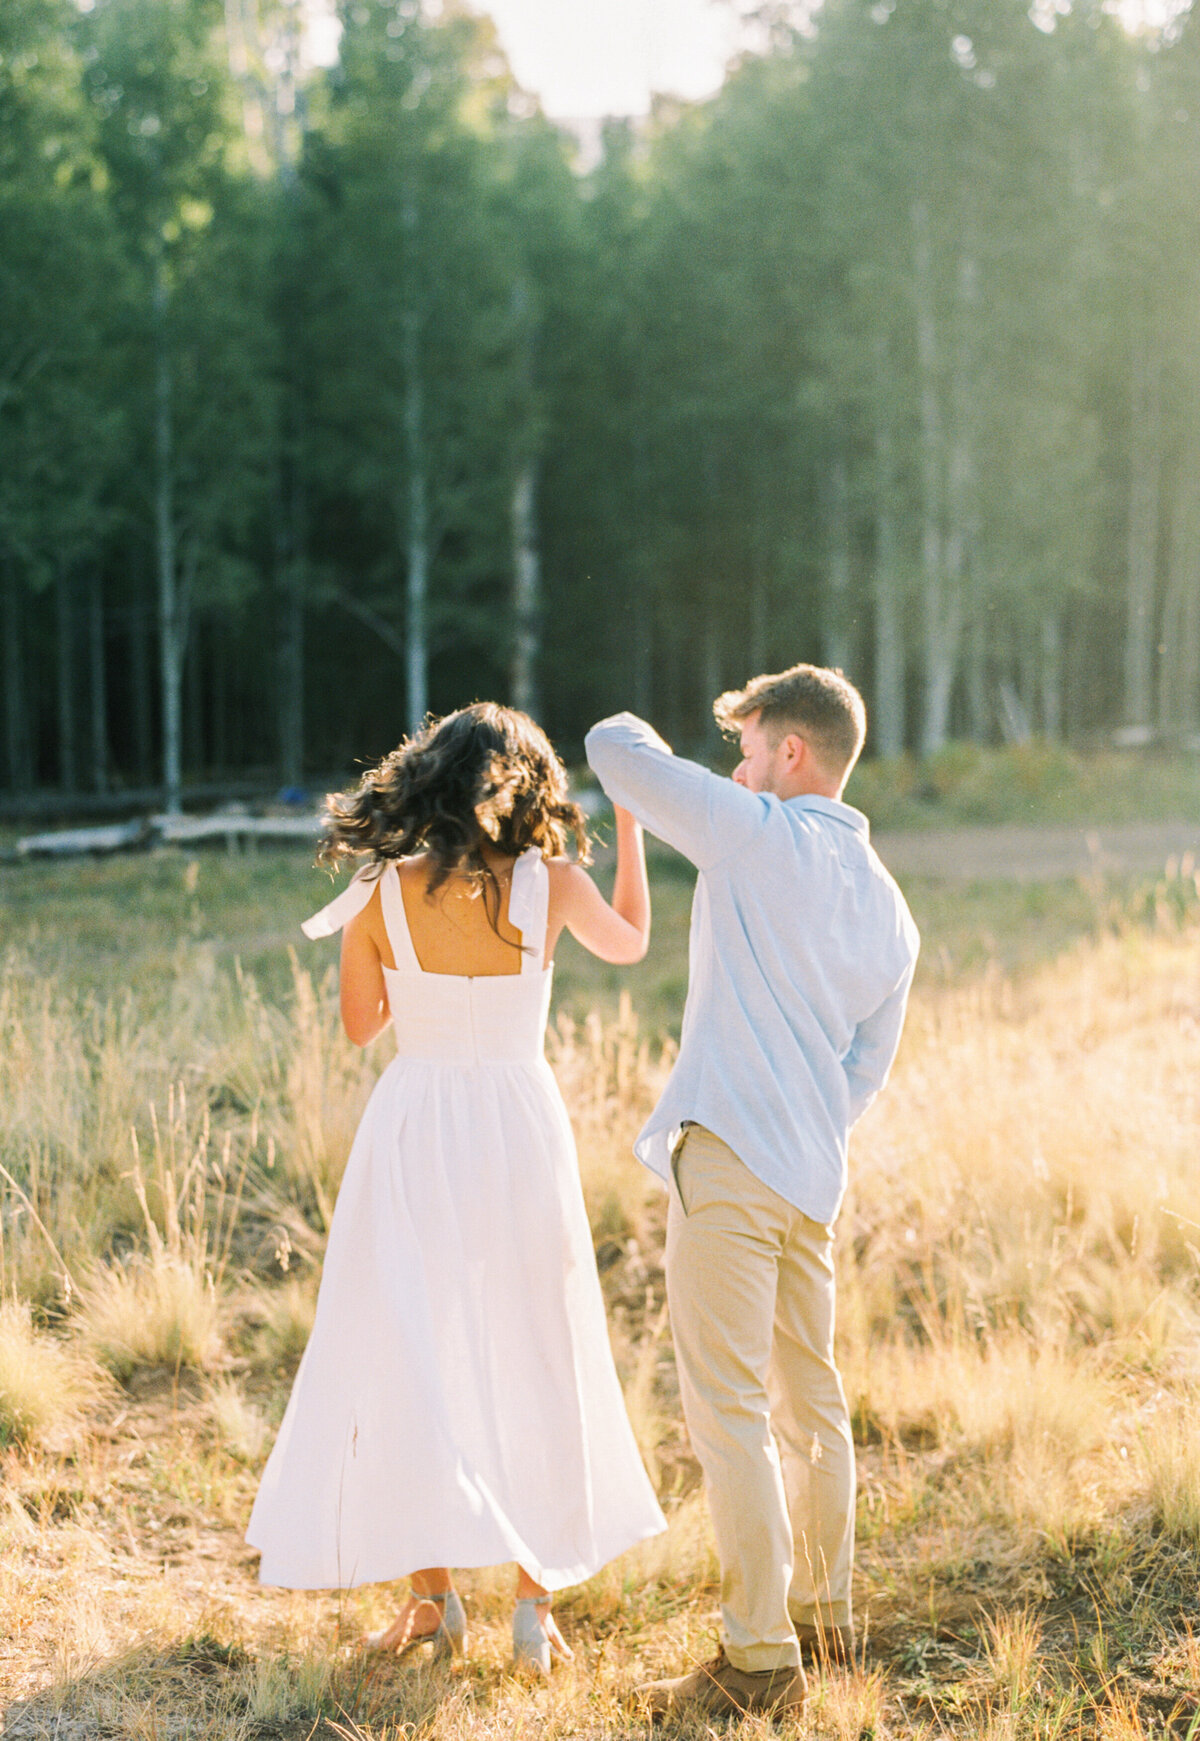 Sam & Tailyr | Engagement Session | Aspen Corner, Flagstaff, Arizona | Mary Claire Photography | Arizona & Destination Fine Art Wedding Photographer